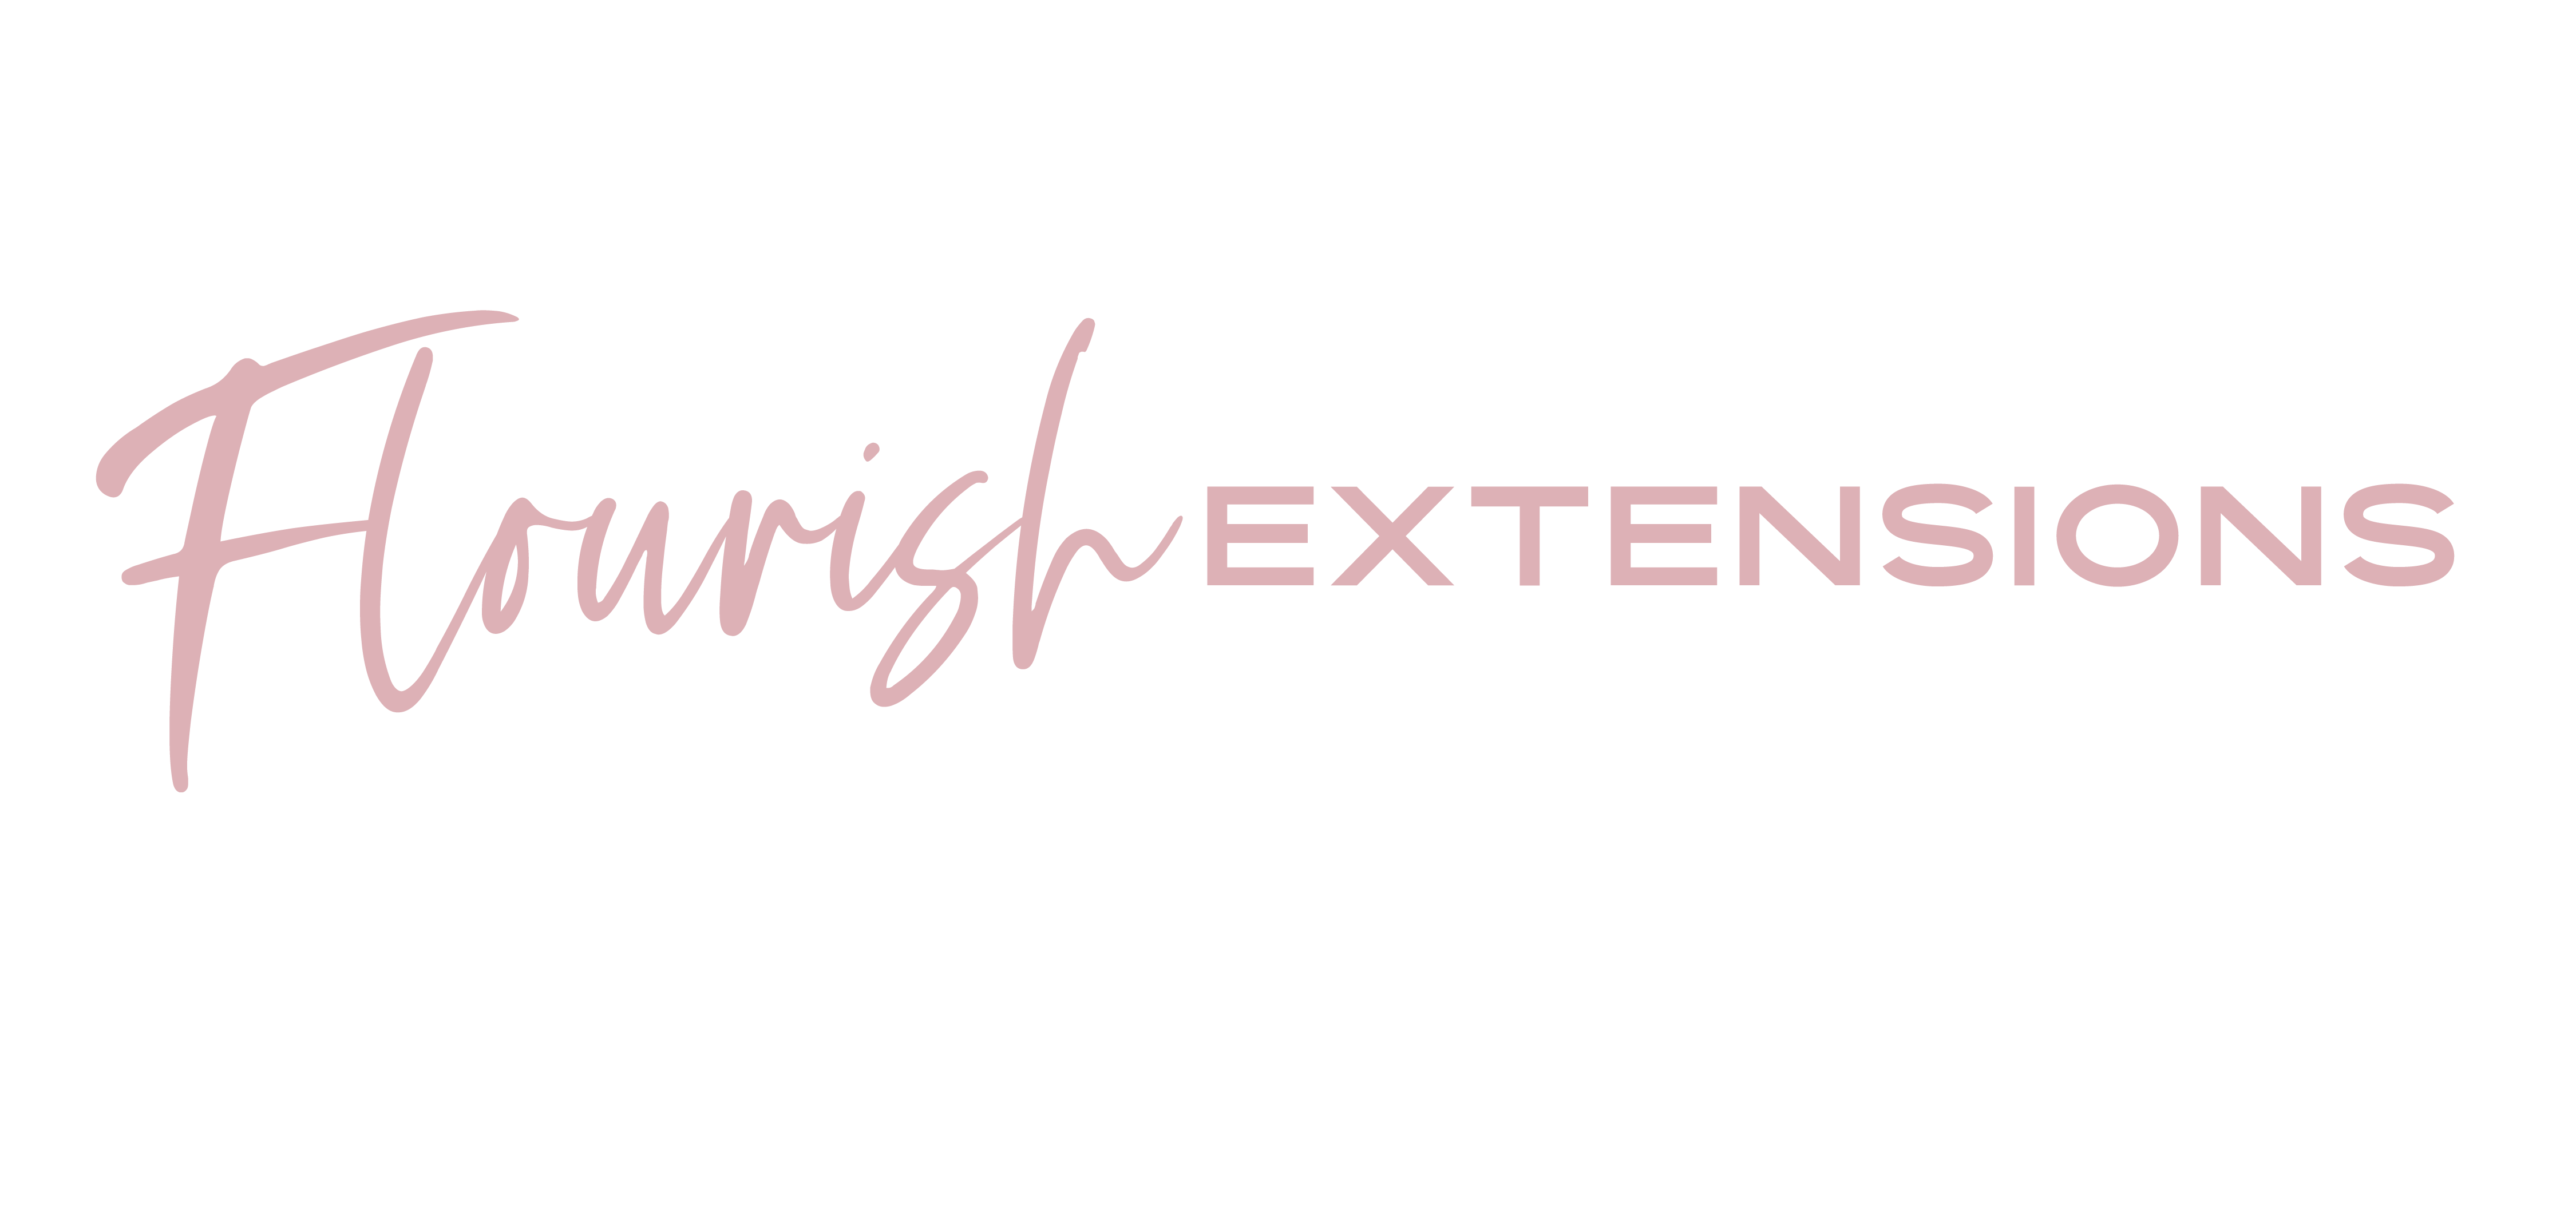 Flourish Extensions